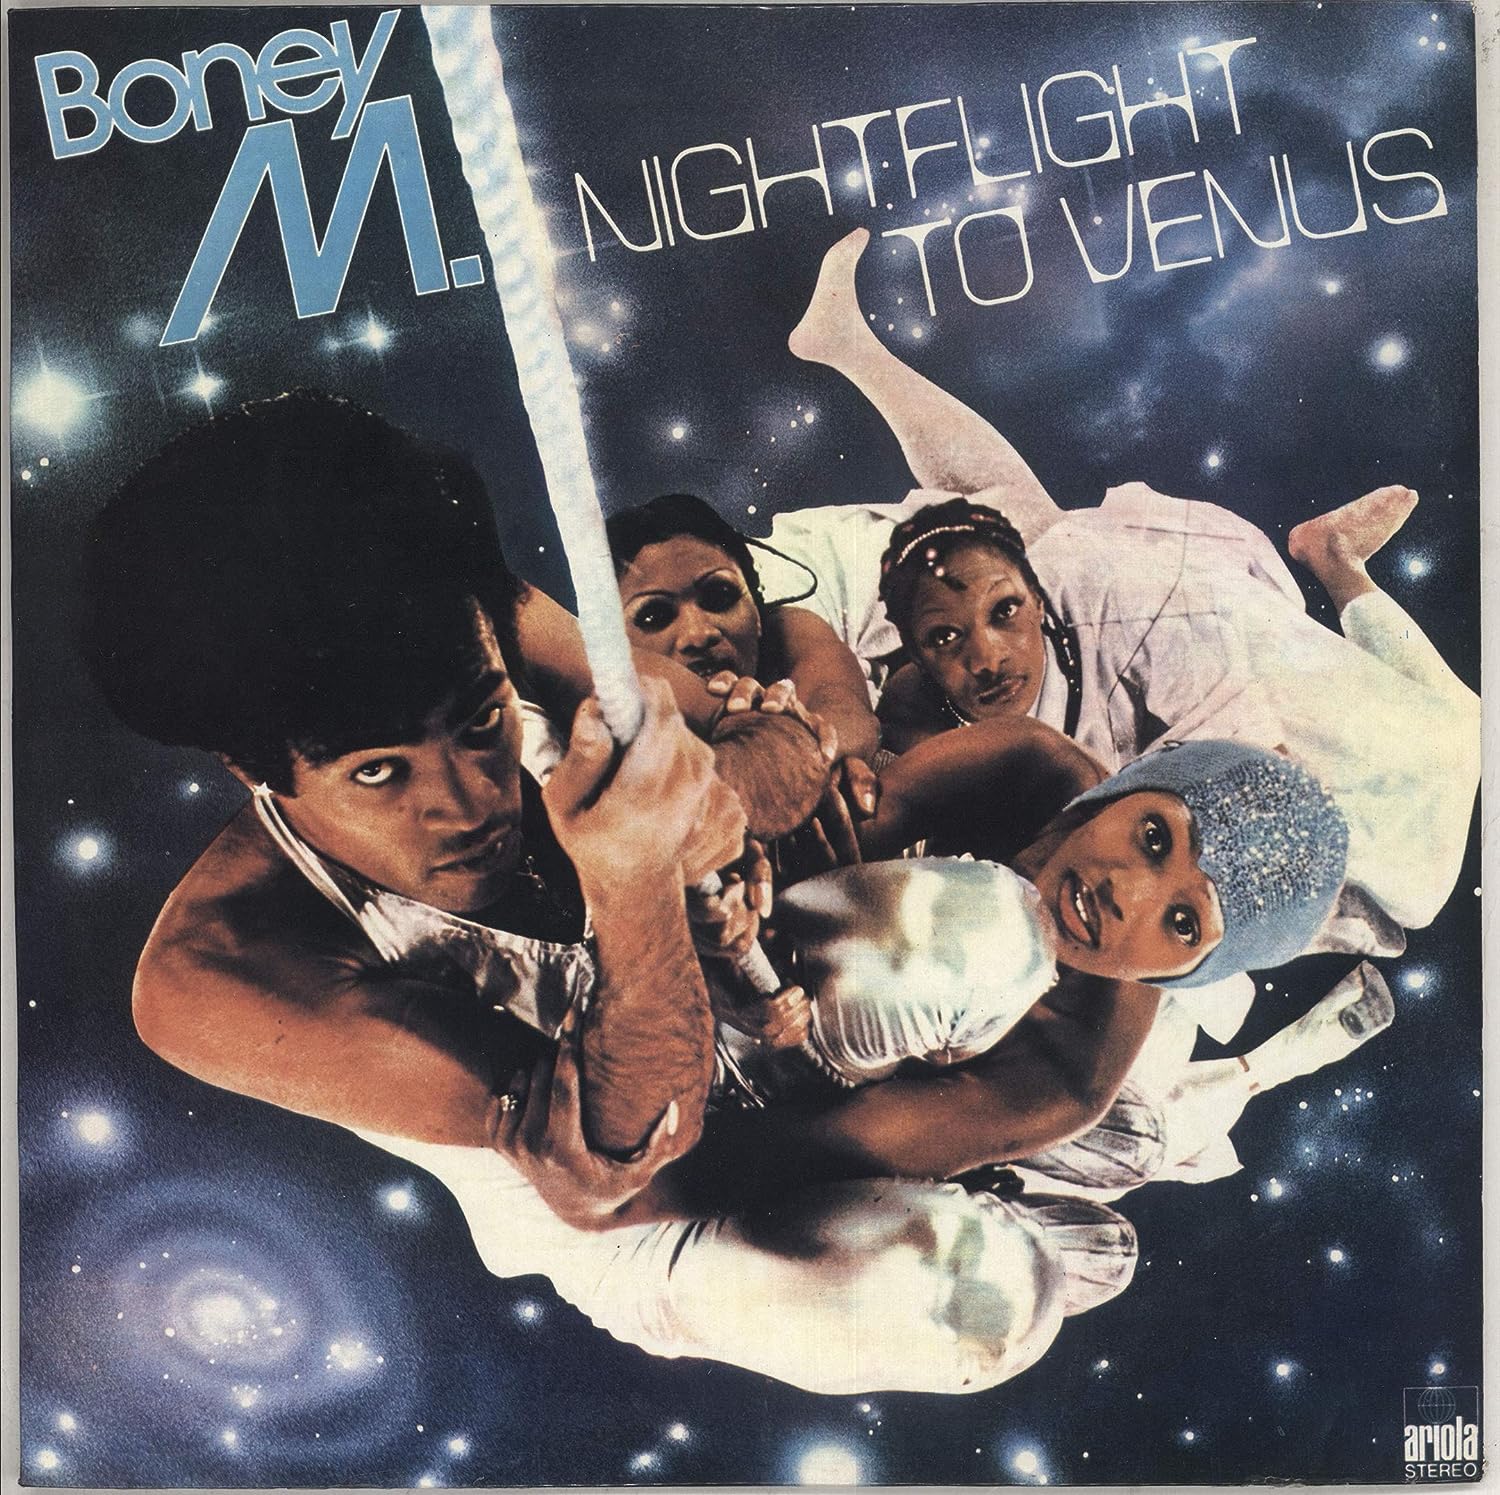 Boney m nightflight. Boney m Nightflight to Venus 1978. Бони м обложки. Обложки пластинок Boney m. Boney m cd1.